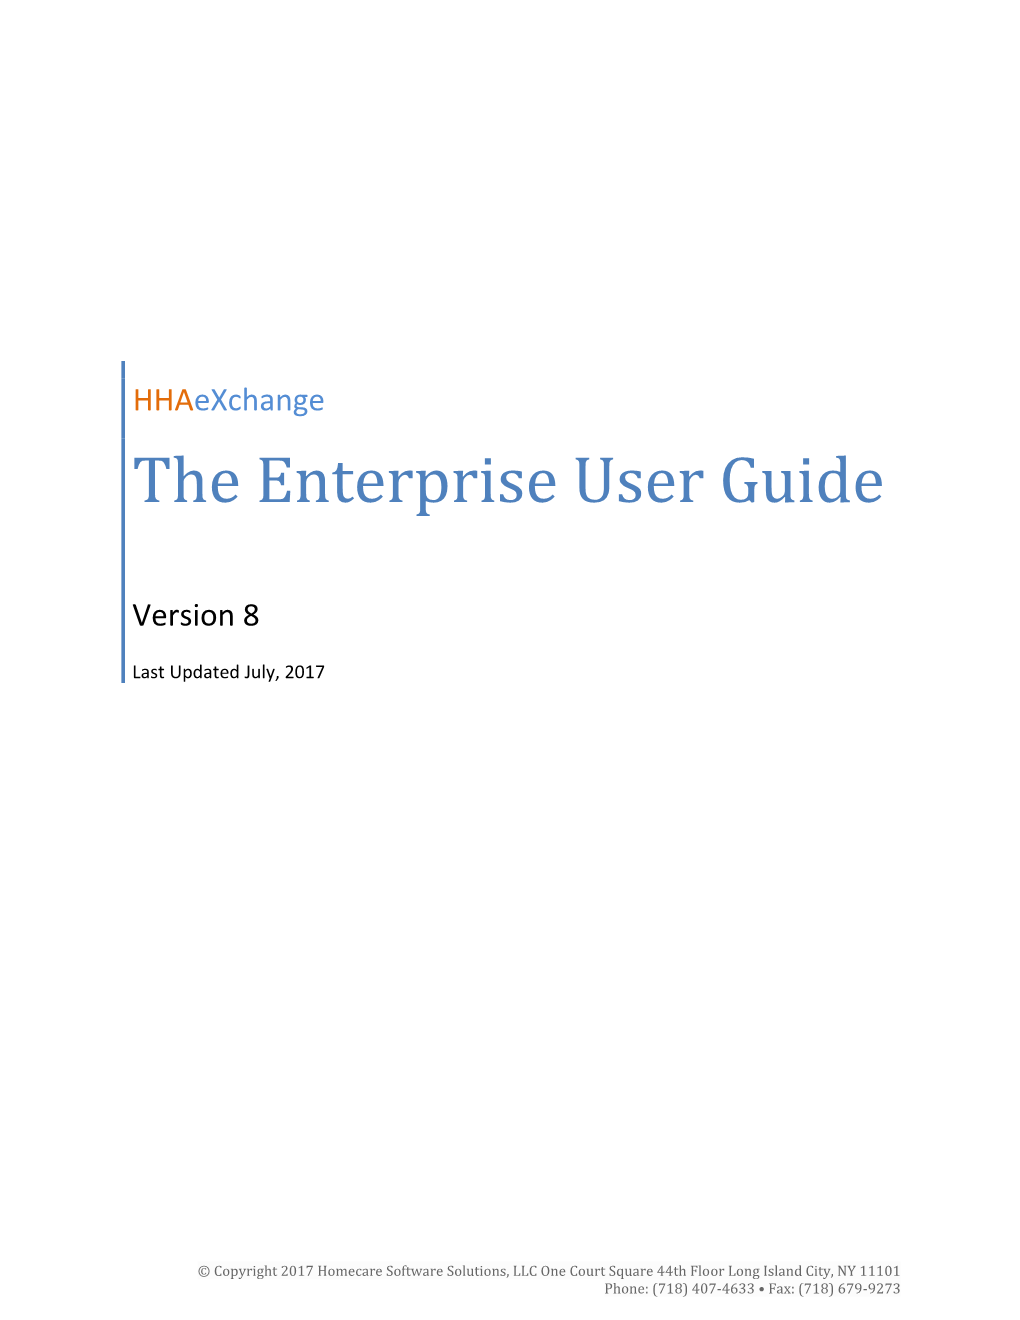 Hhaexchange the Enterprise User Guide